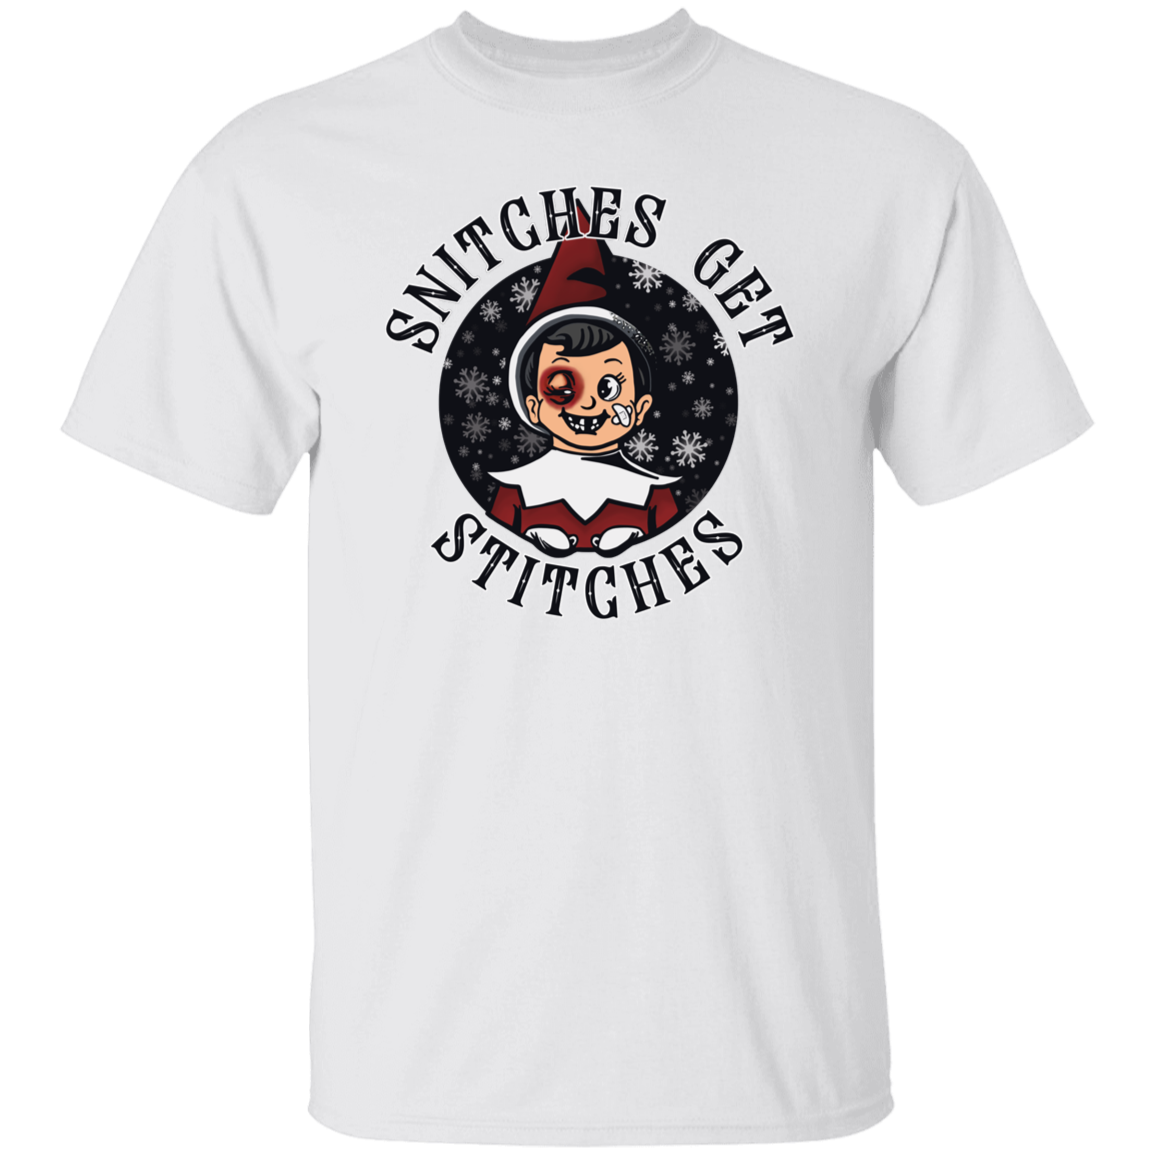 Snitches Get Stitches G500 5.3 oz. T-Shirt